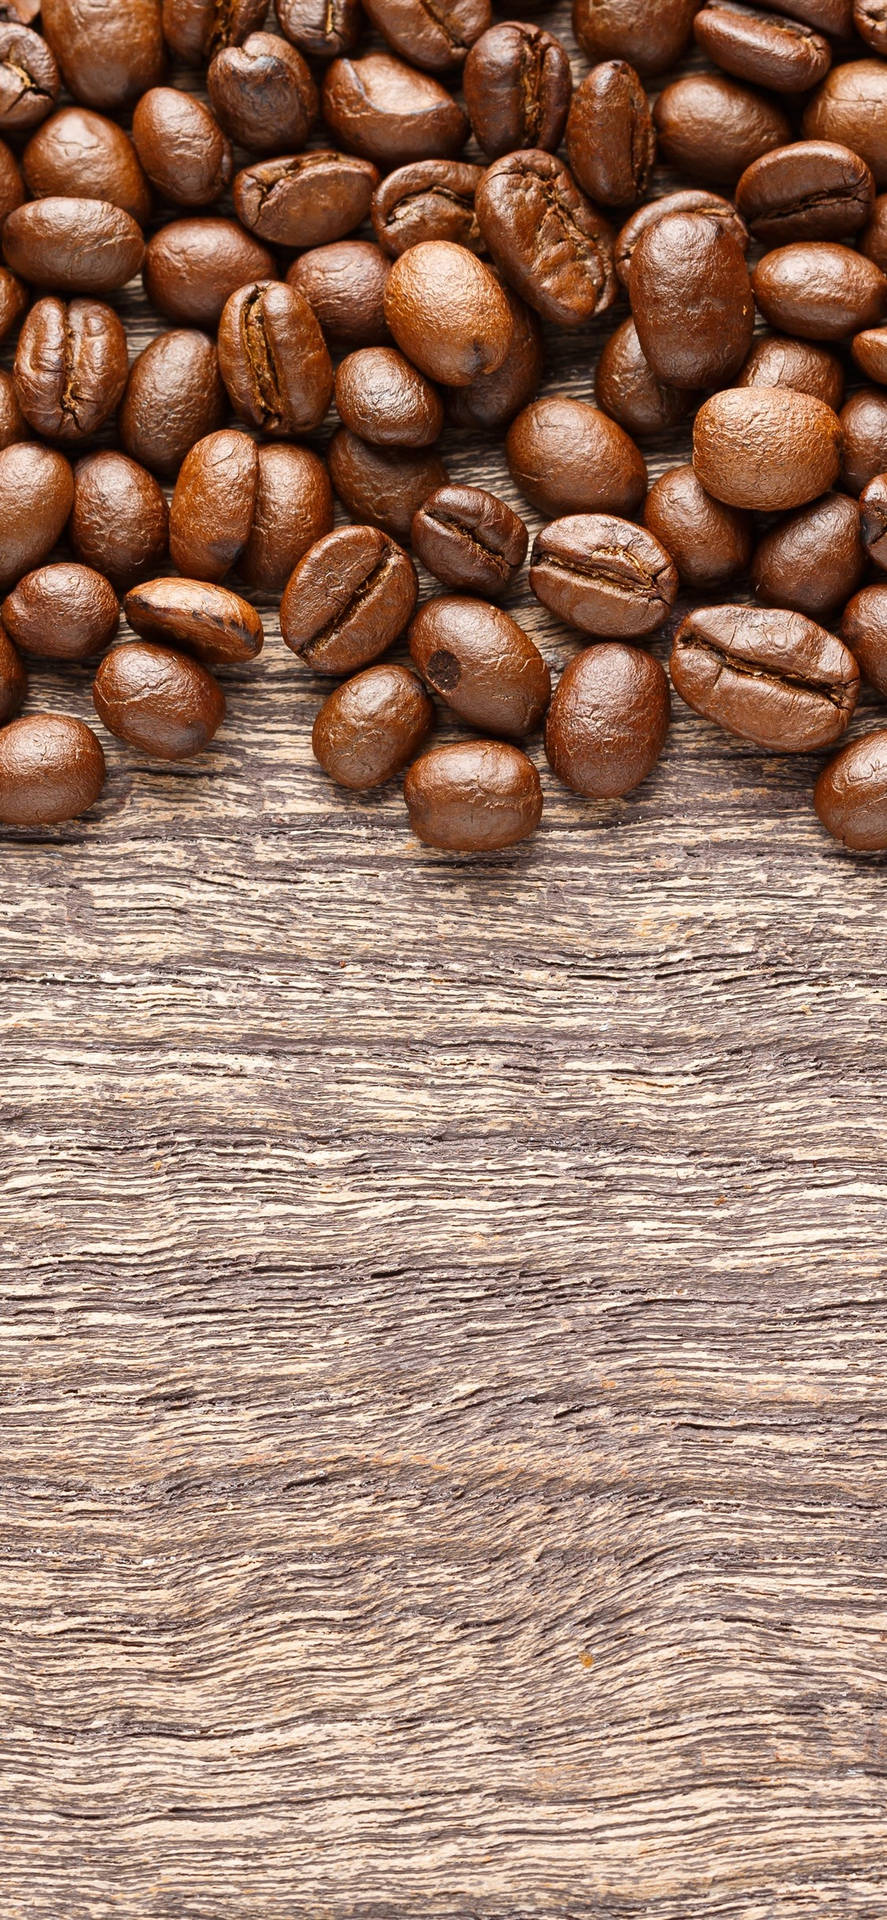 Freshly Roasted Coffee Beans Wallpaper